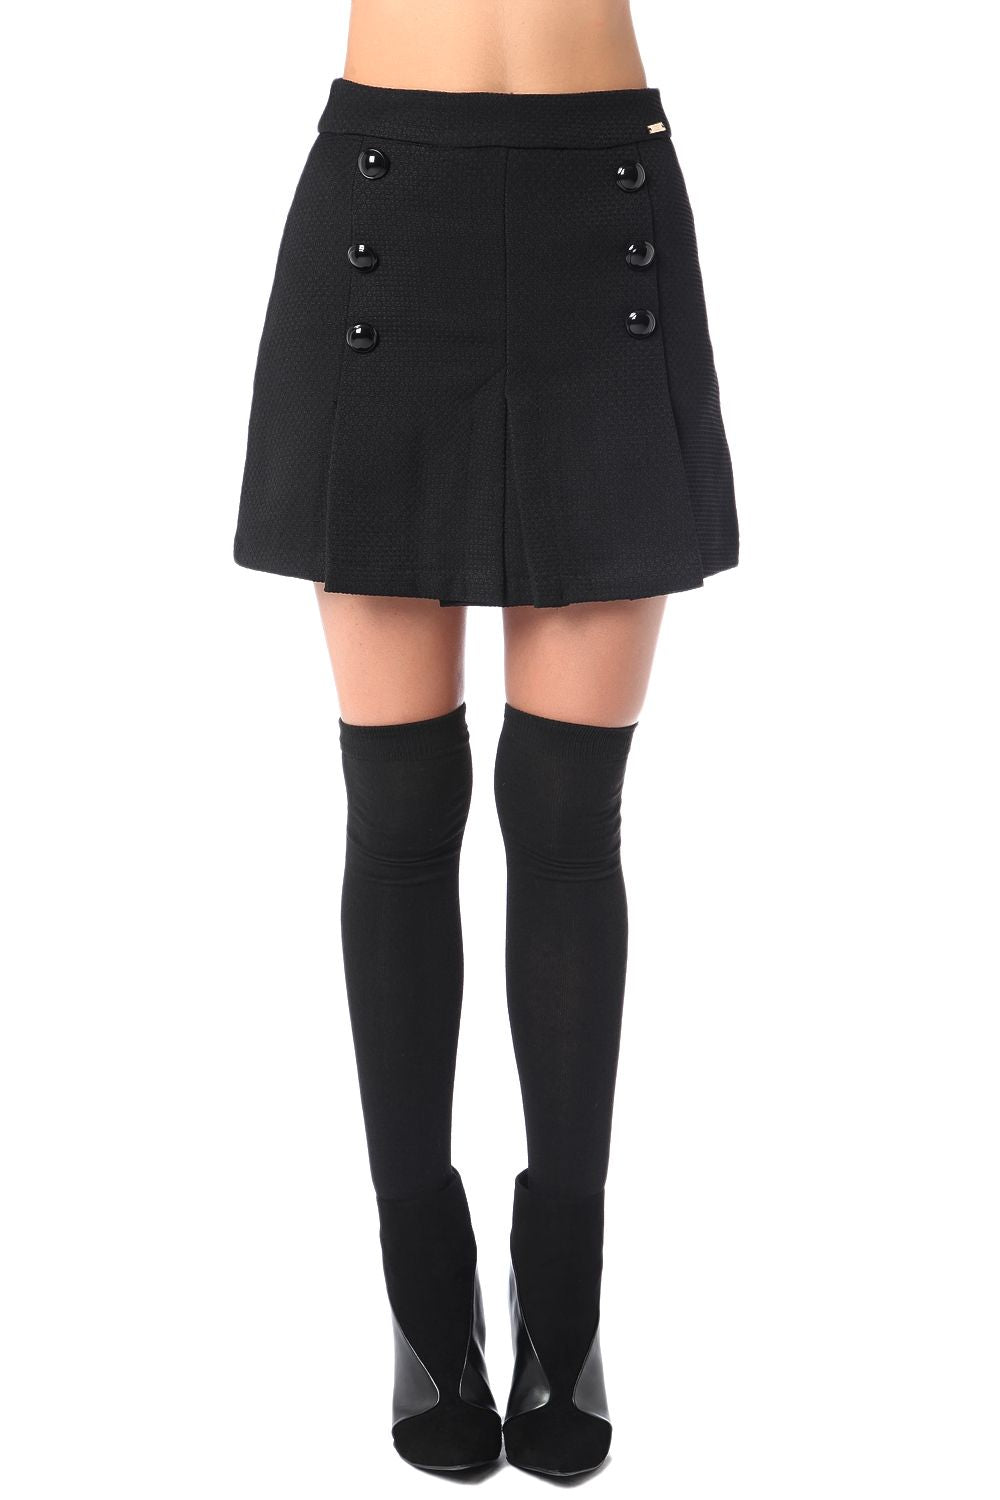 Q2 Black mini skirt with black button detail